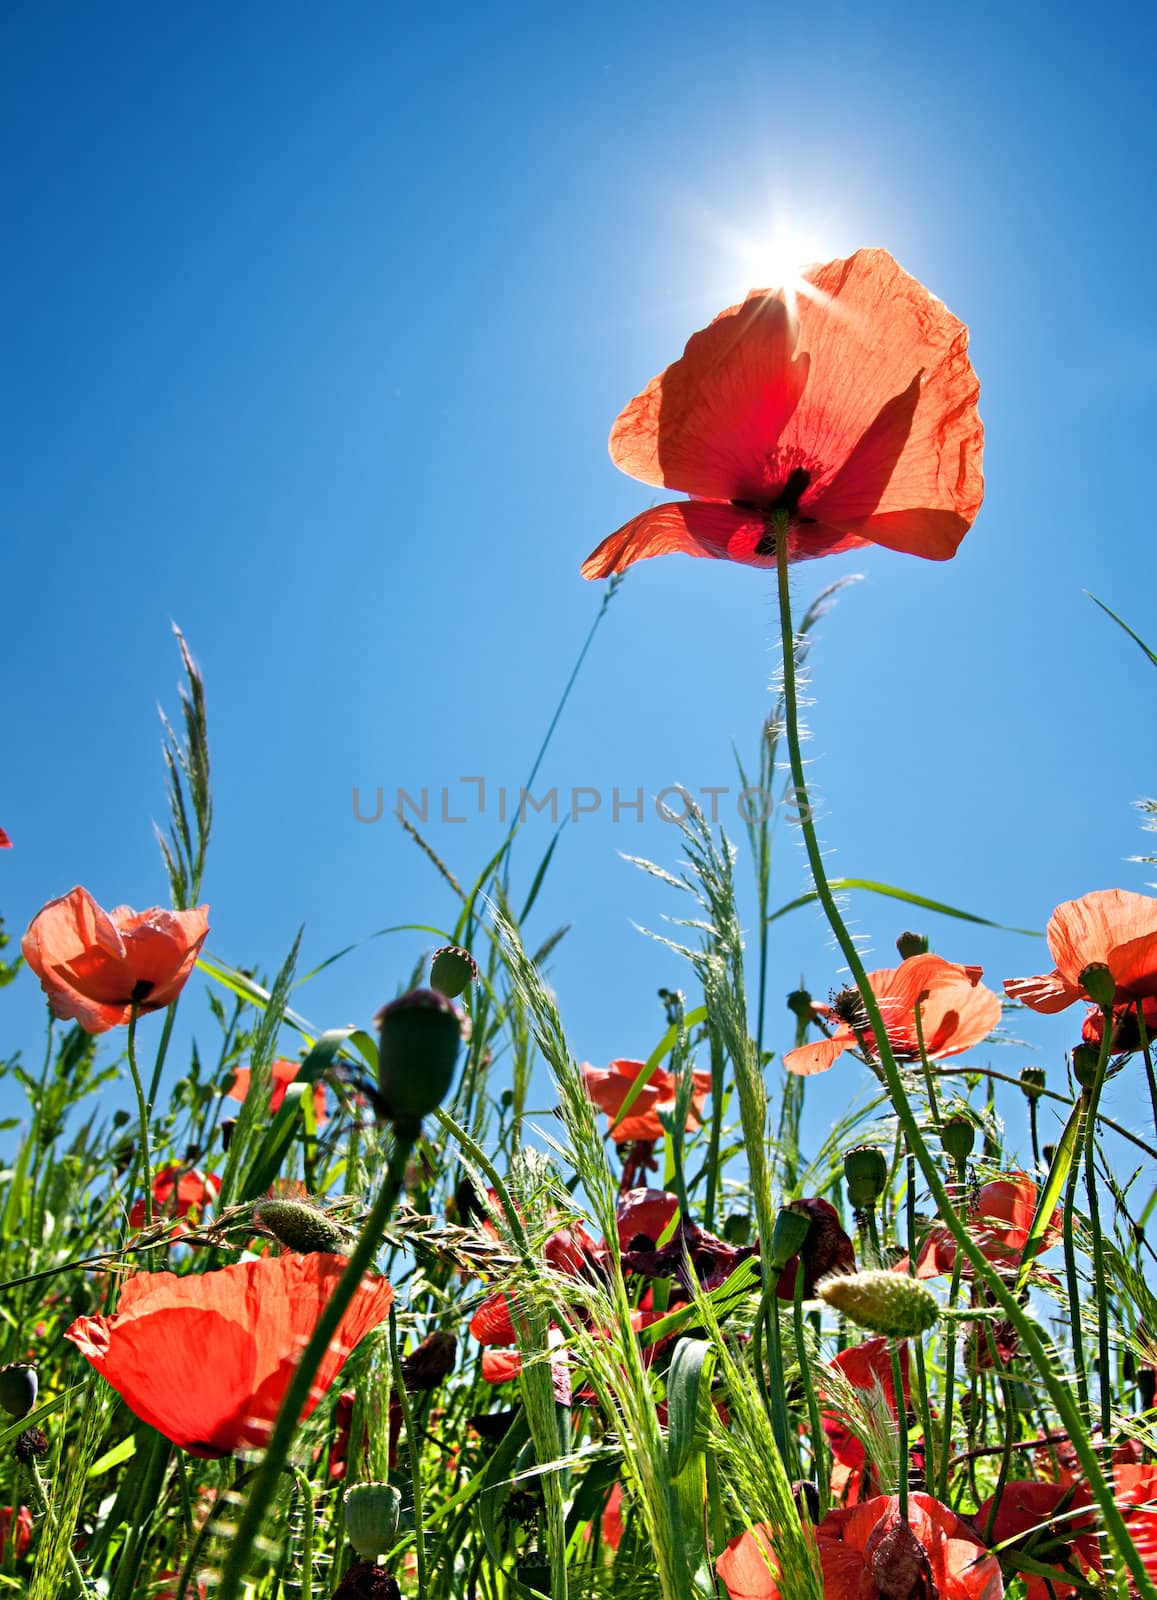 Poppy field background with sunlight